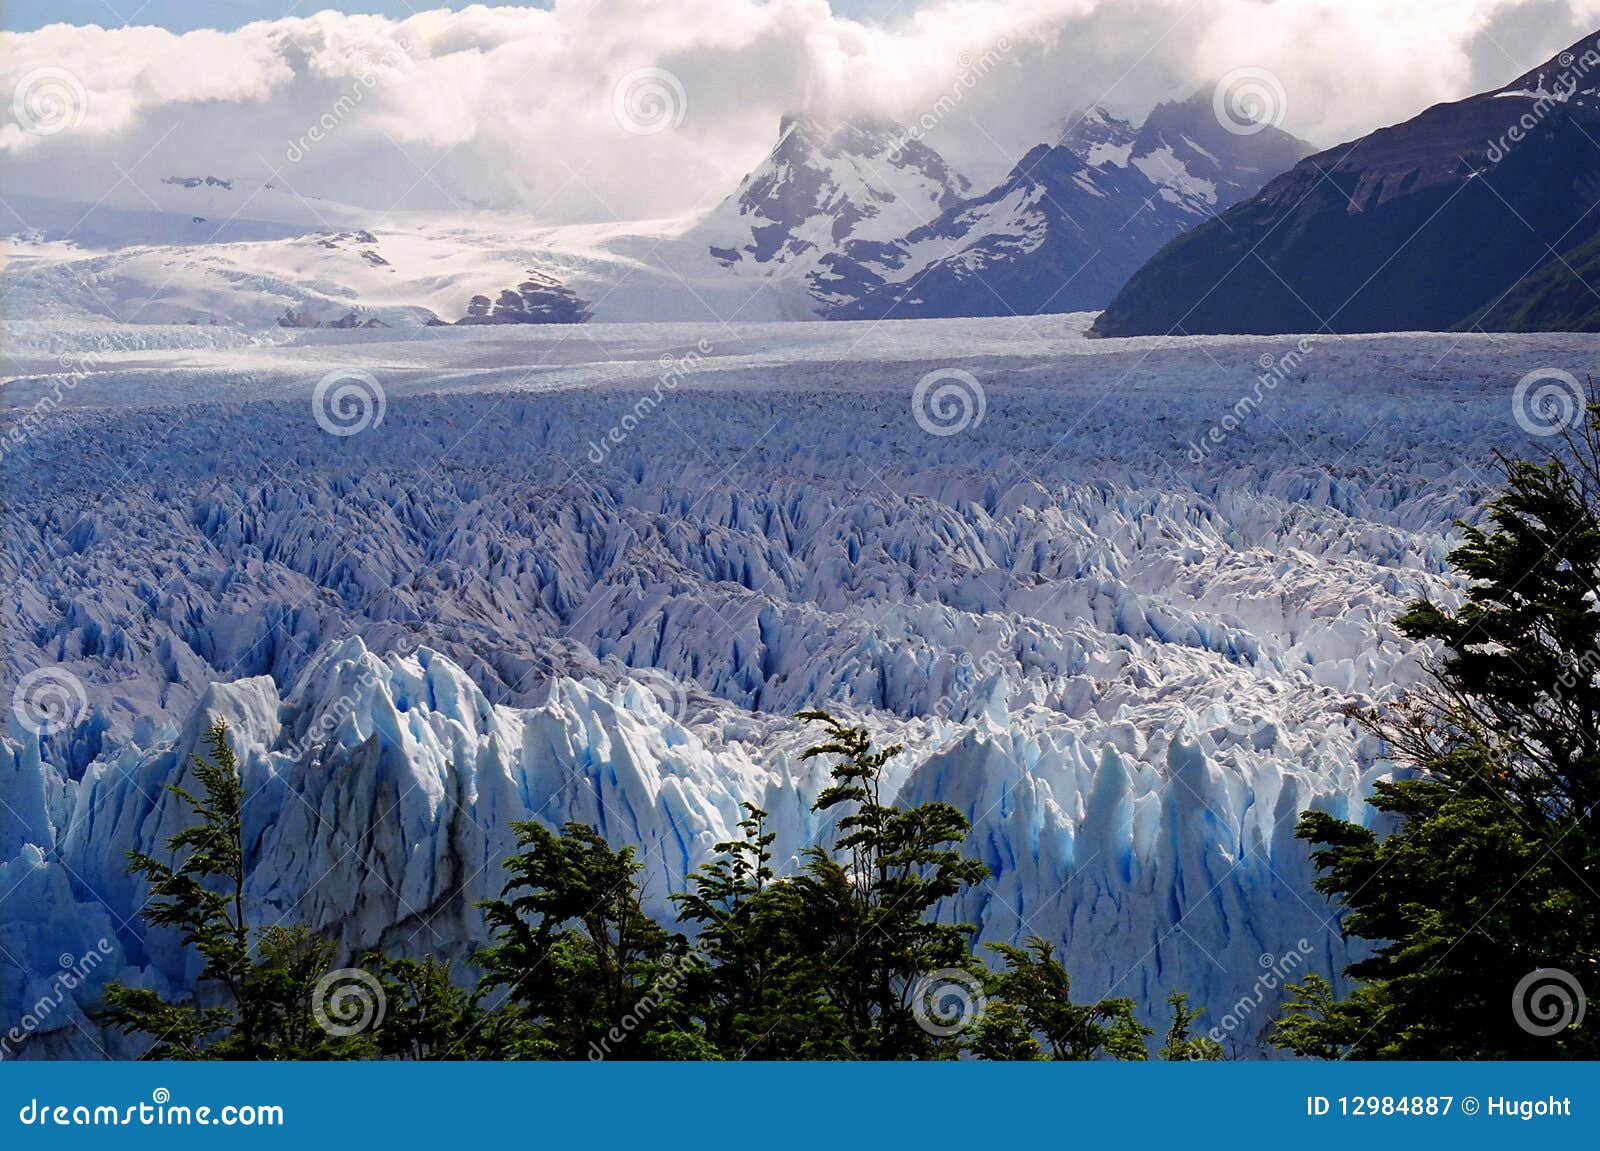 perito moreno glacier, patagonia argentina